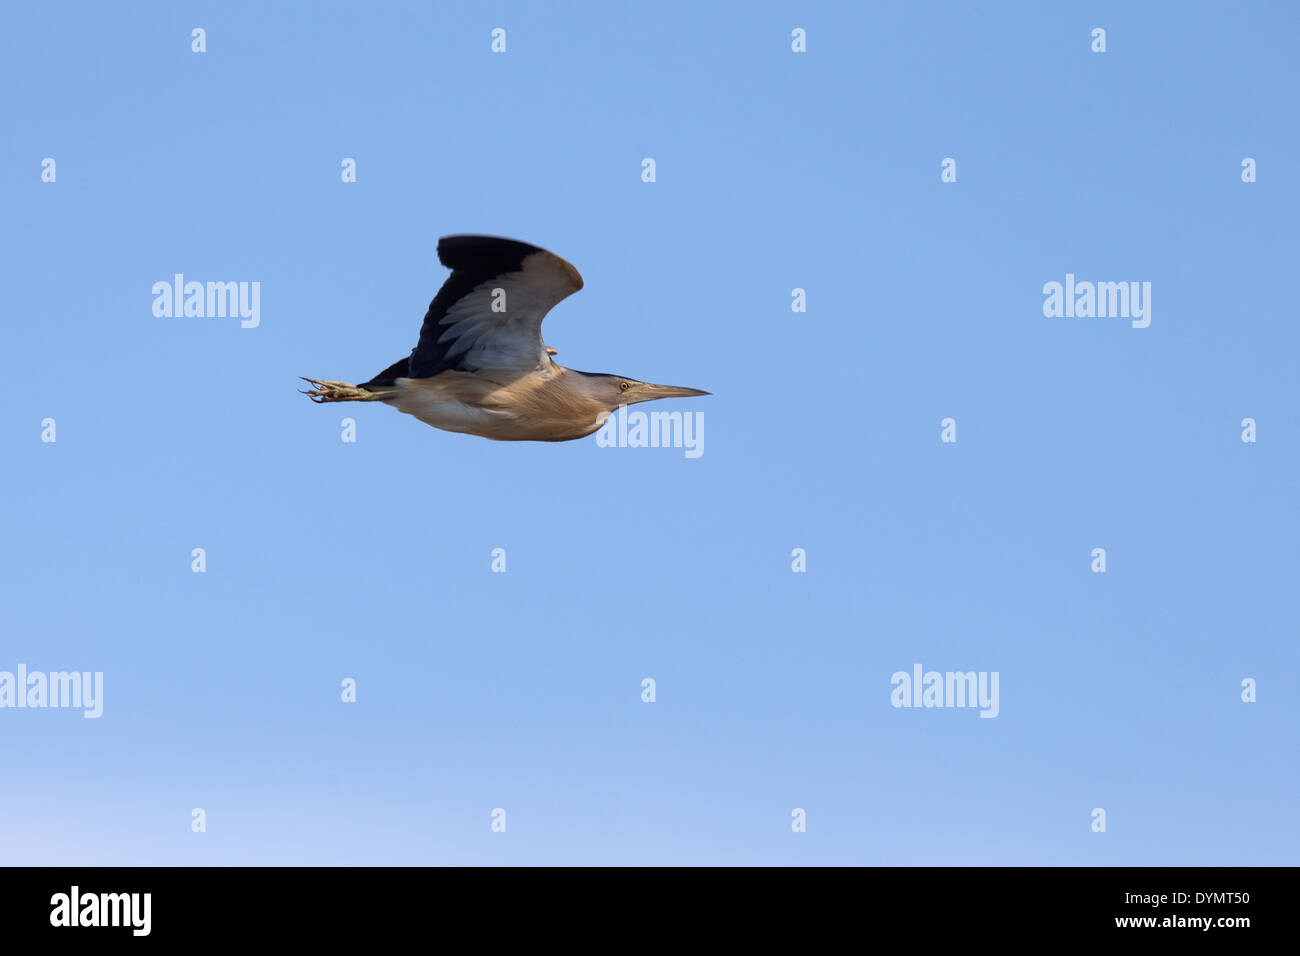 An adult Little Bittern in flight against a blue sky, Manavgat, Turkey. Stock Photo